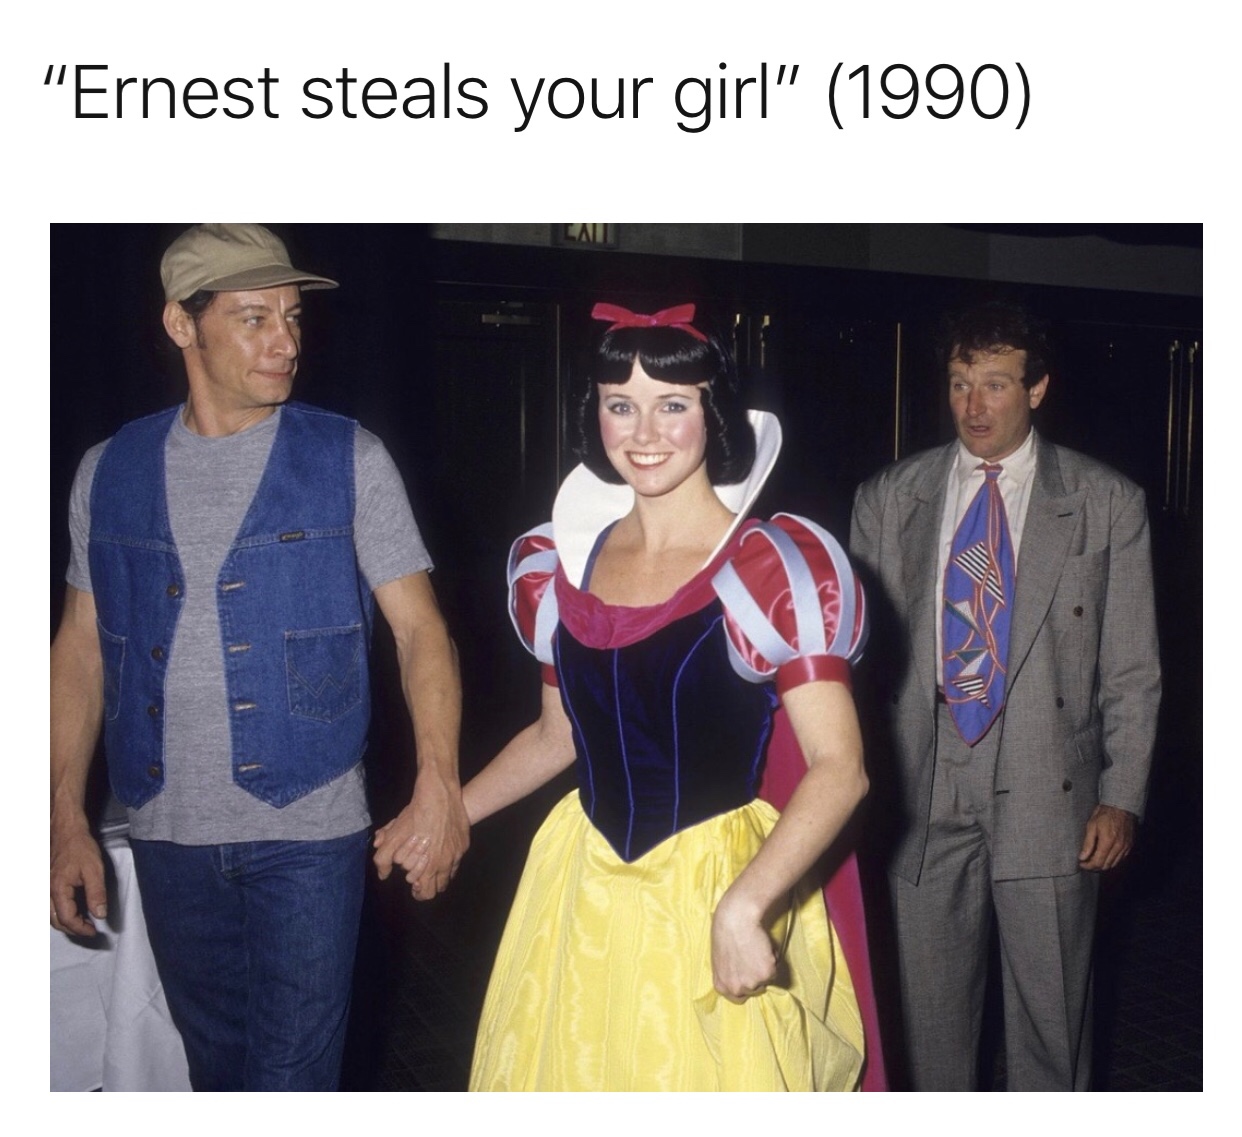 jim varney robin williams snow white - "Ernest steals your girl" 1990